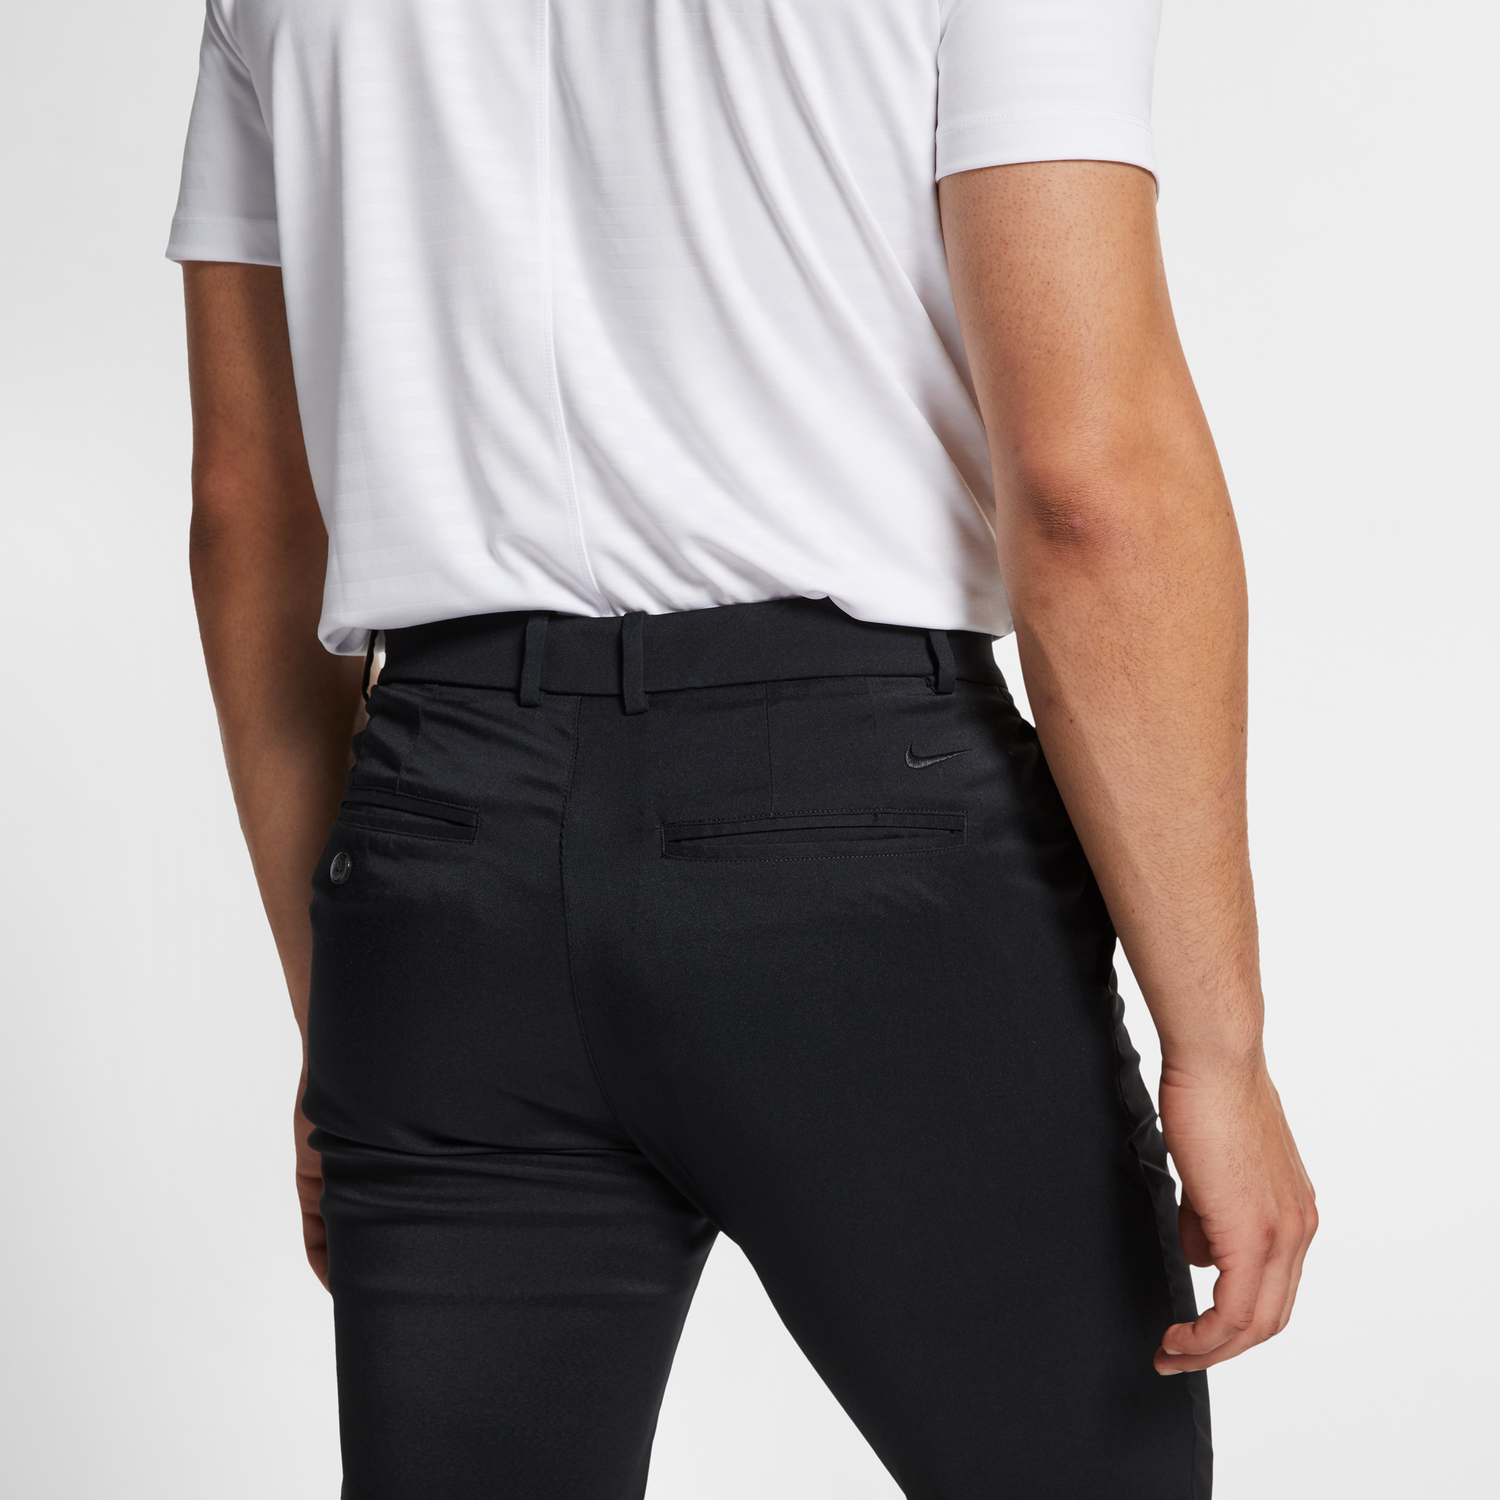 Nike Golf DriFIT slim chino trousers in beige  ASOS